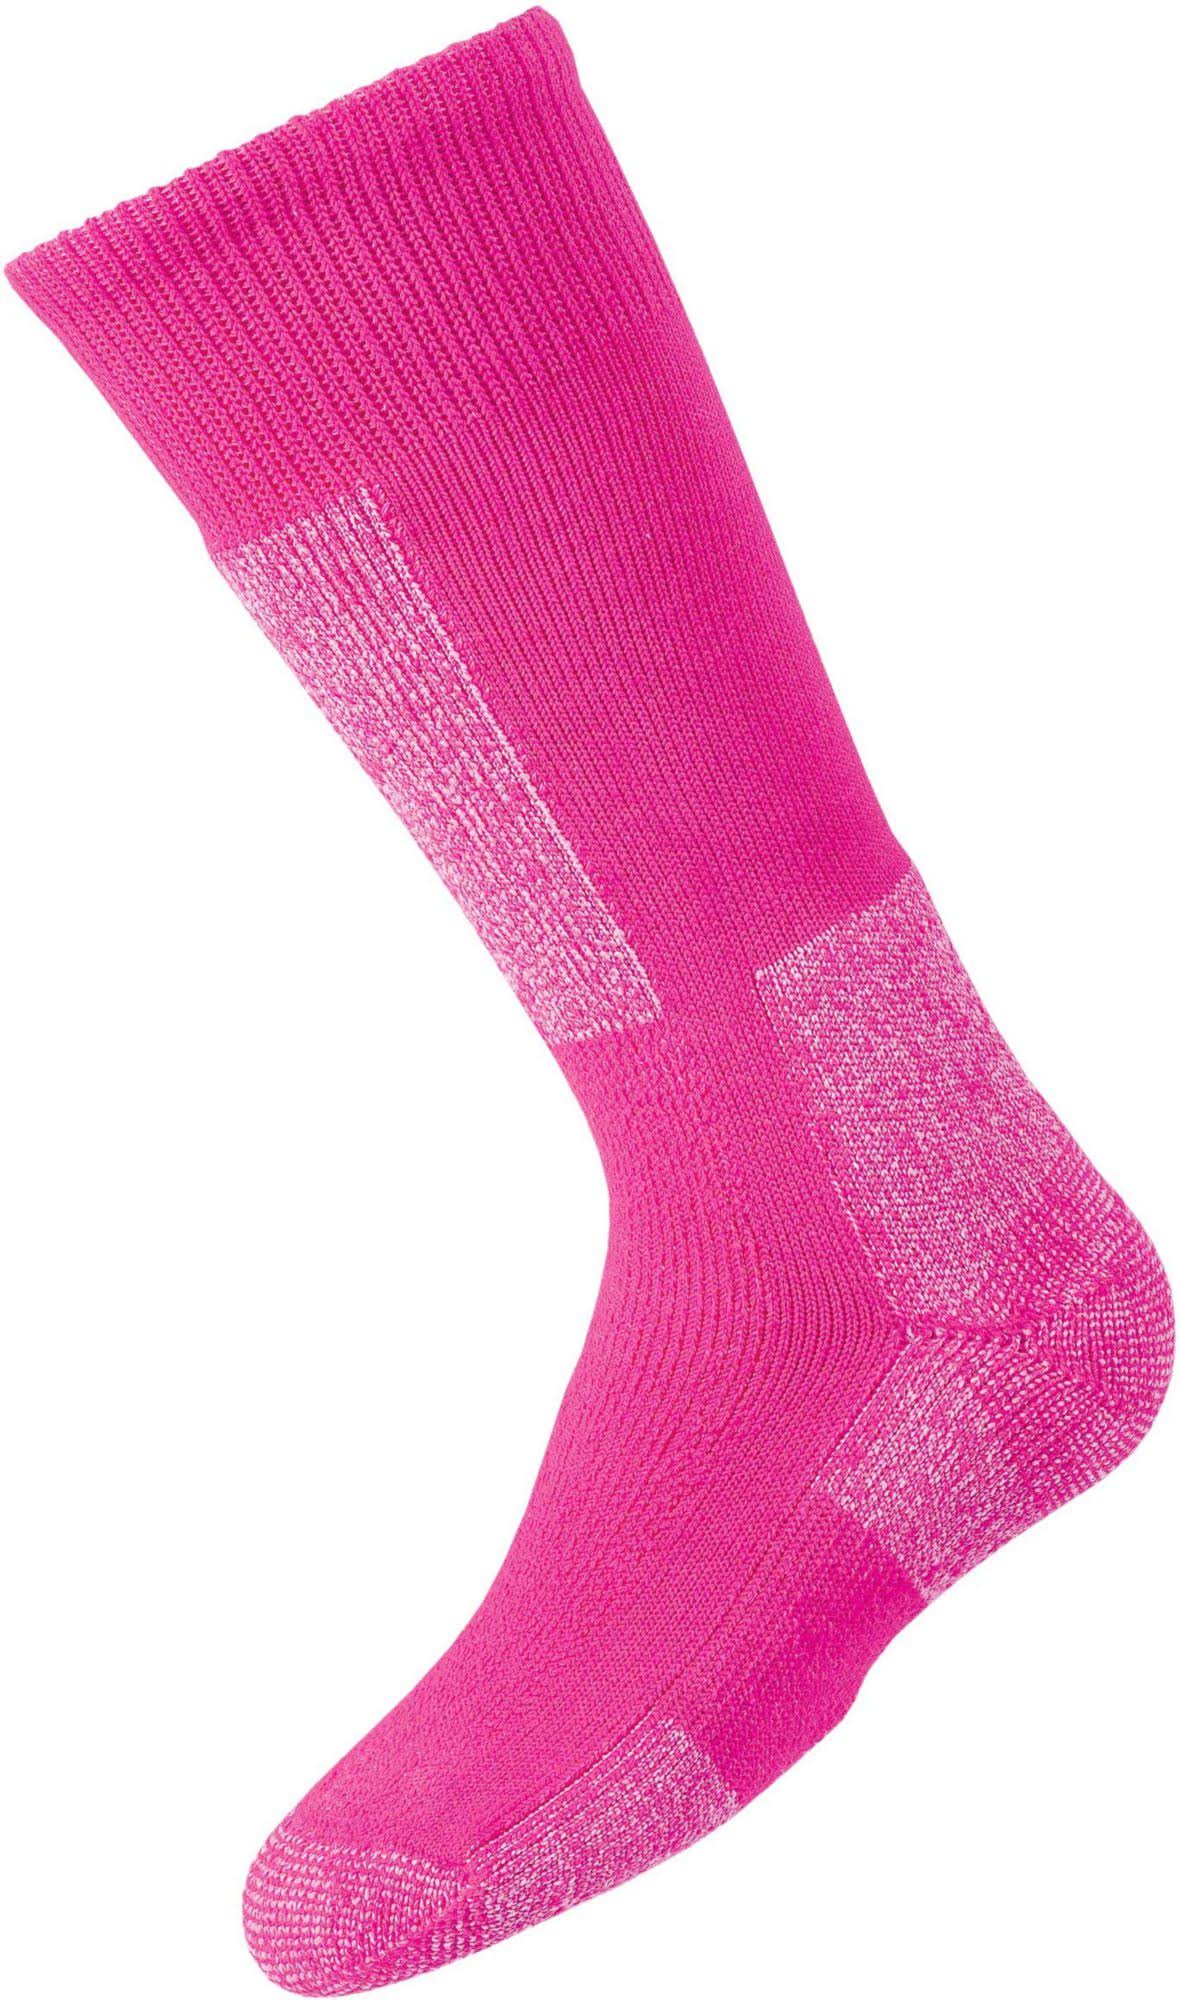 Thorlo Kids Snow Over Calf Socks Schuss Pink/WhiteYouth Size 13.5-4.0